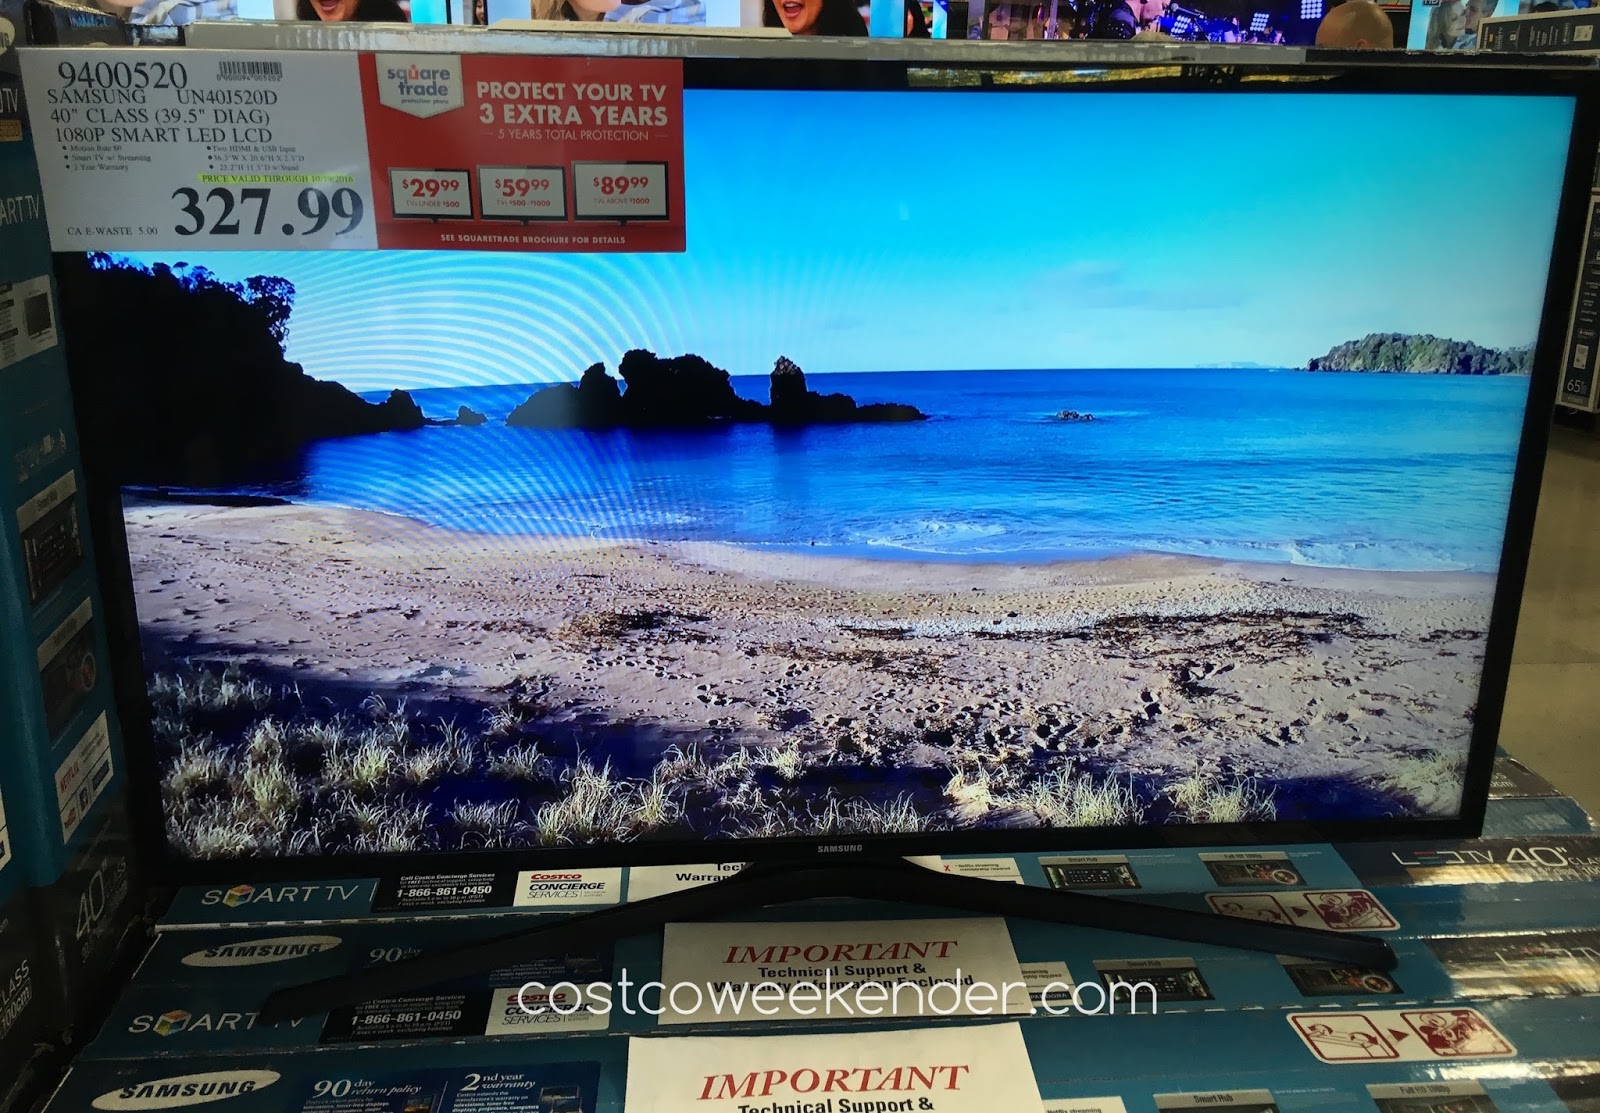 Samsung Un40j520d 40 1080p Smart Led Lcd Tv Costco Weekender